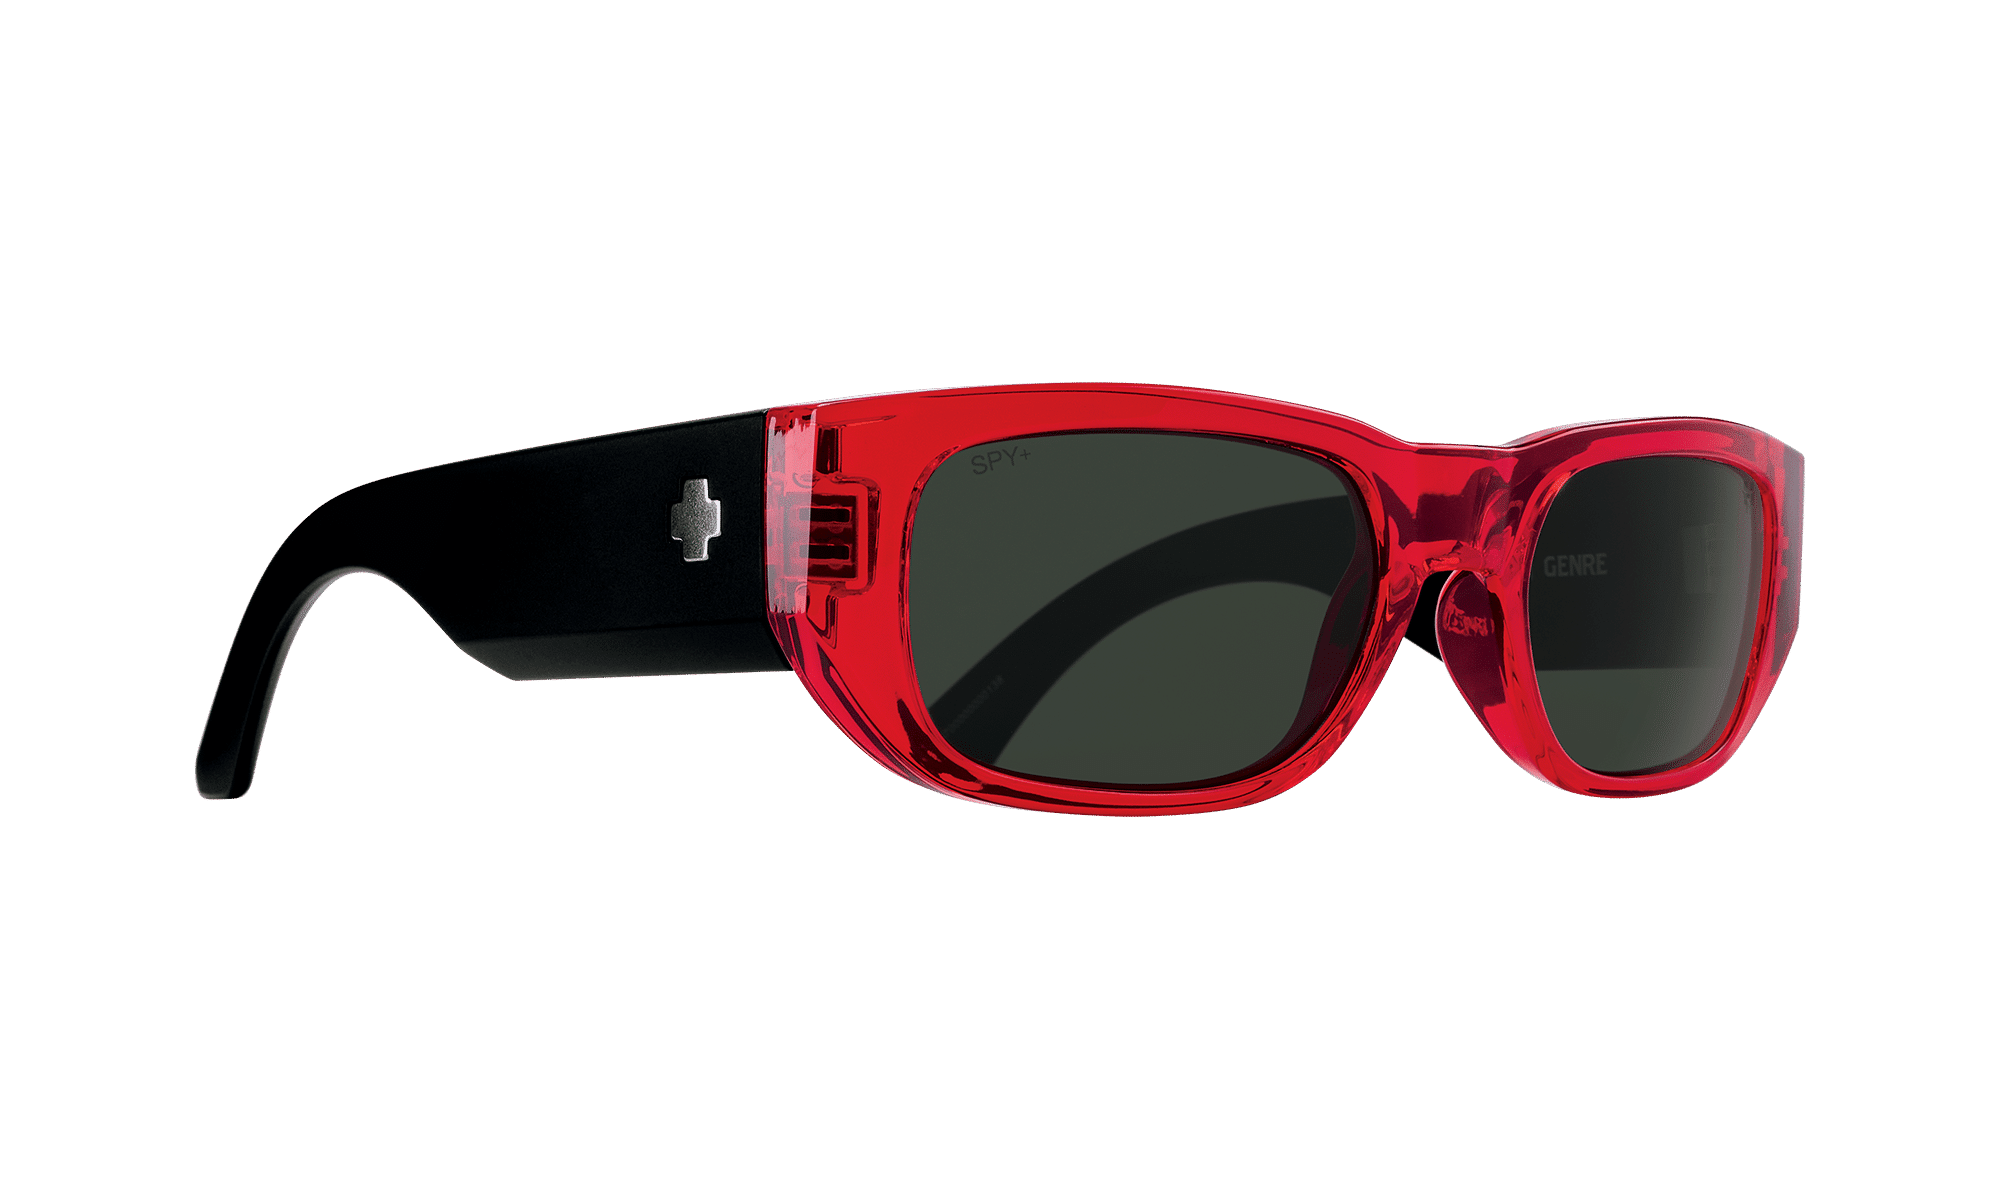 Genre Sunglasses - - #1 Online Equipment Supplier